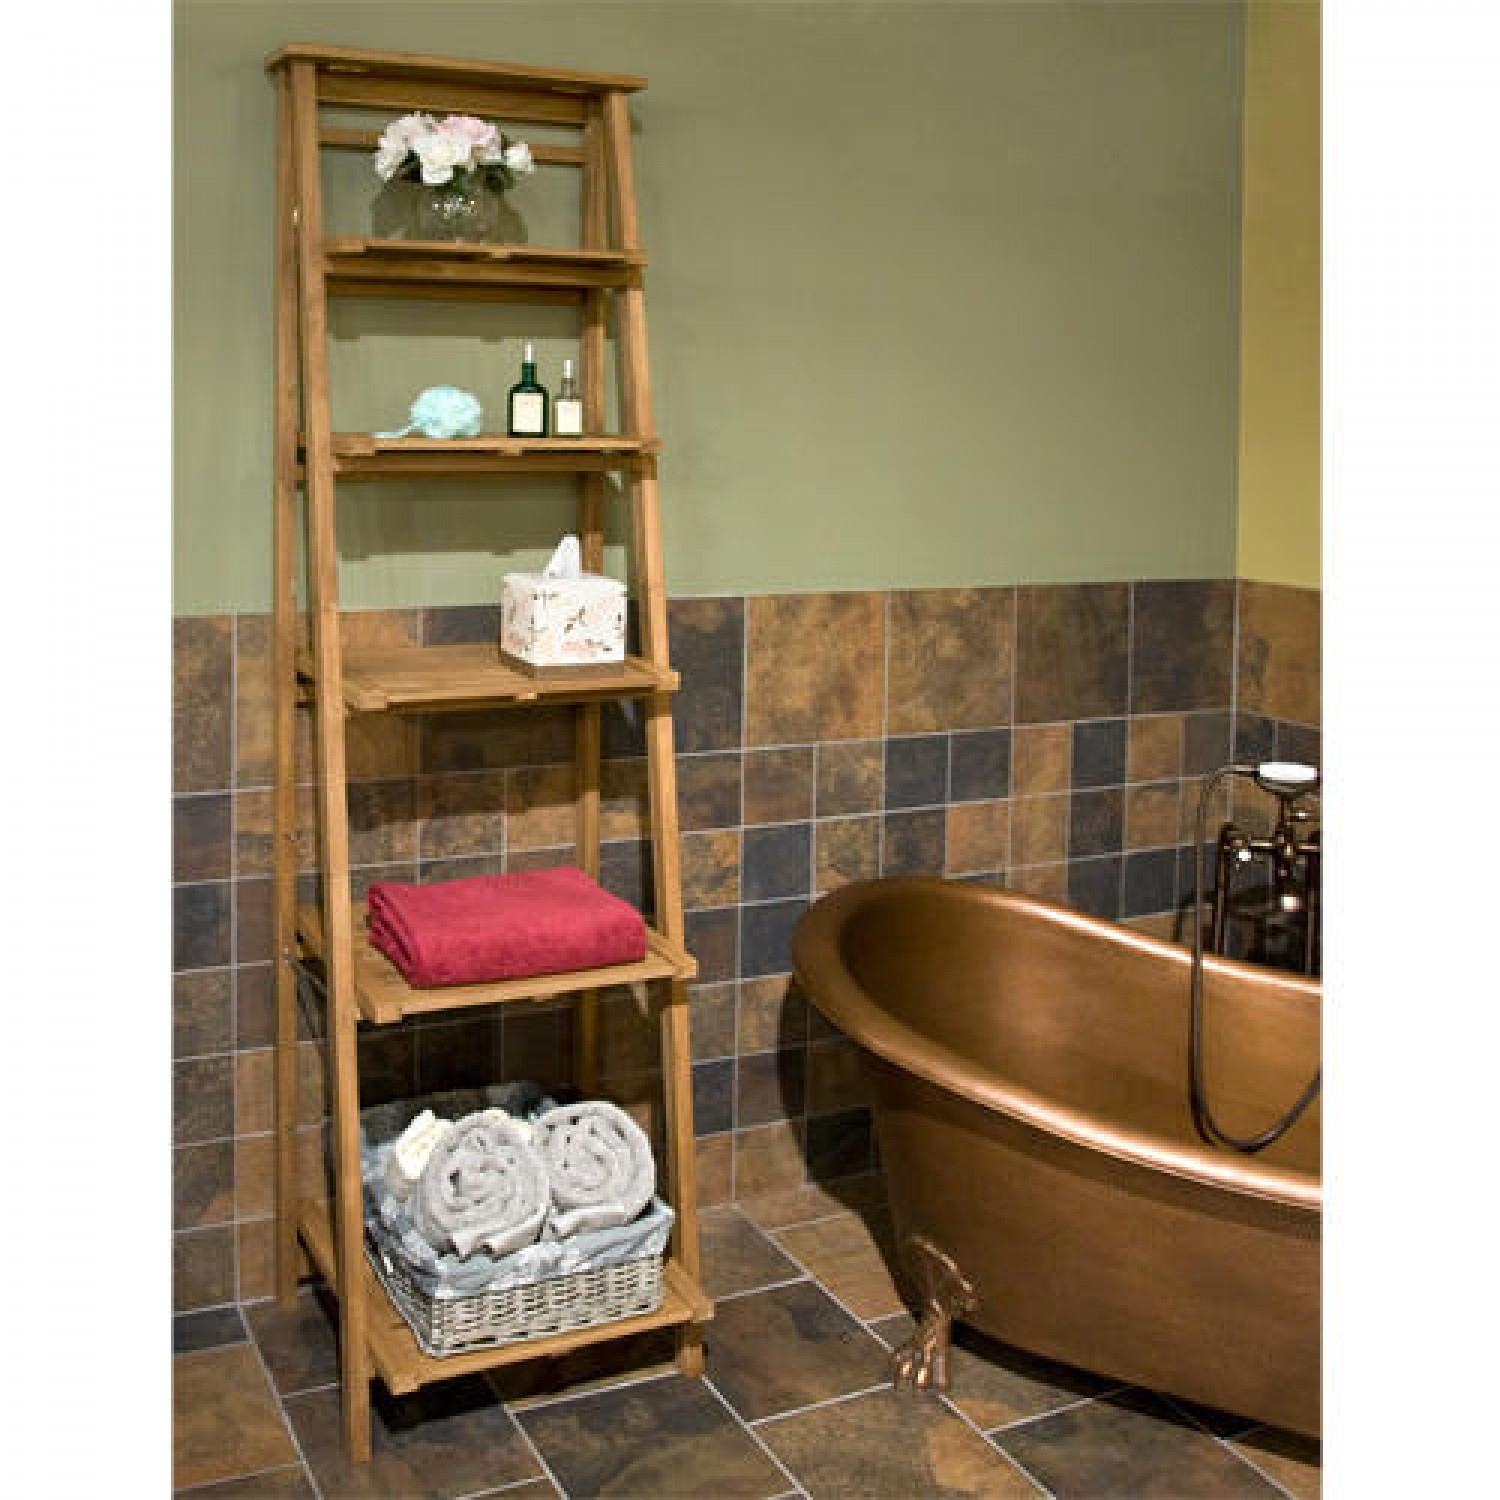 Bathroom Cabinet Shelves
 Cottage Bathroom Look Add This Bathroom Ladder Shelf